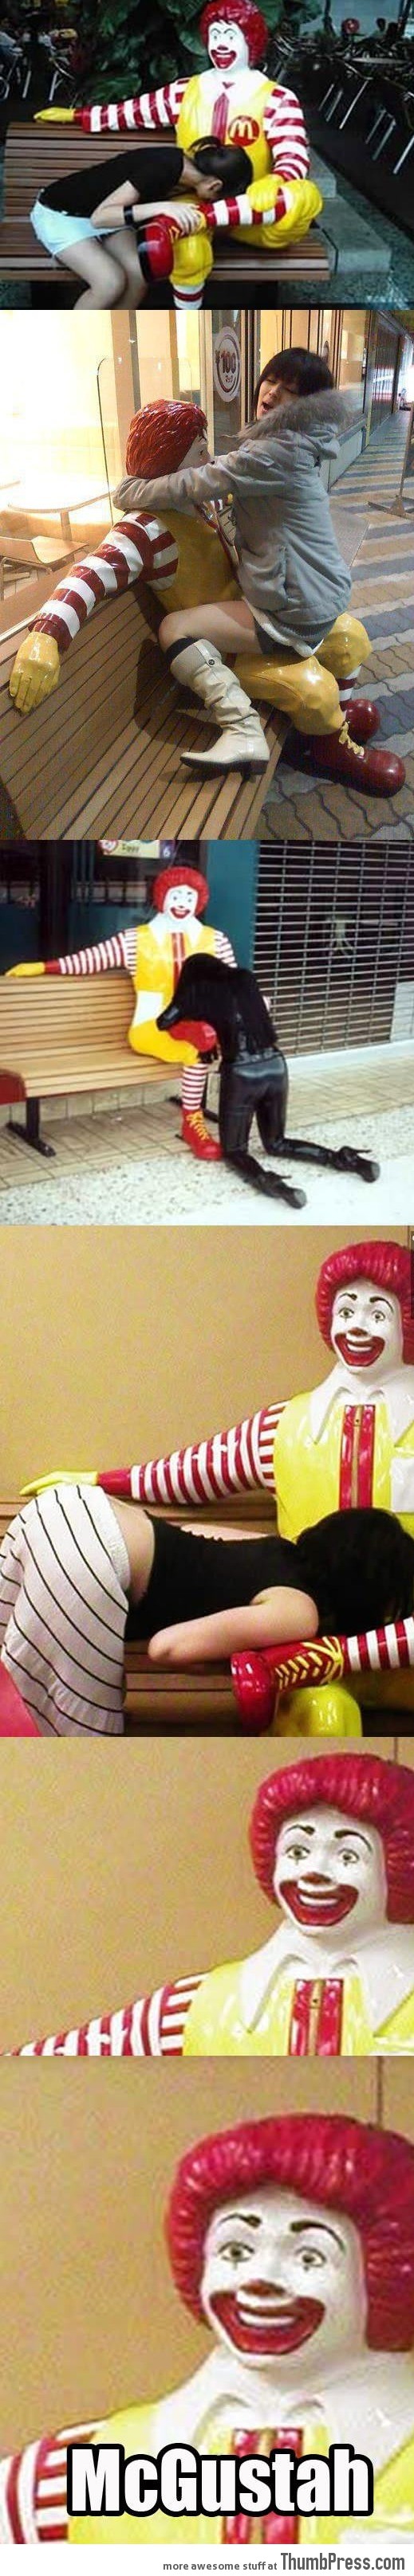 Ronald gets plenty of action